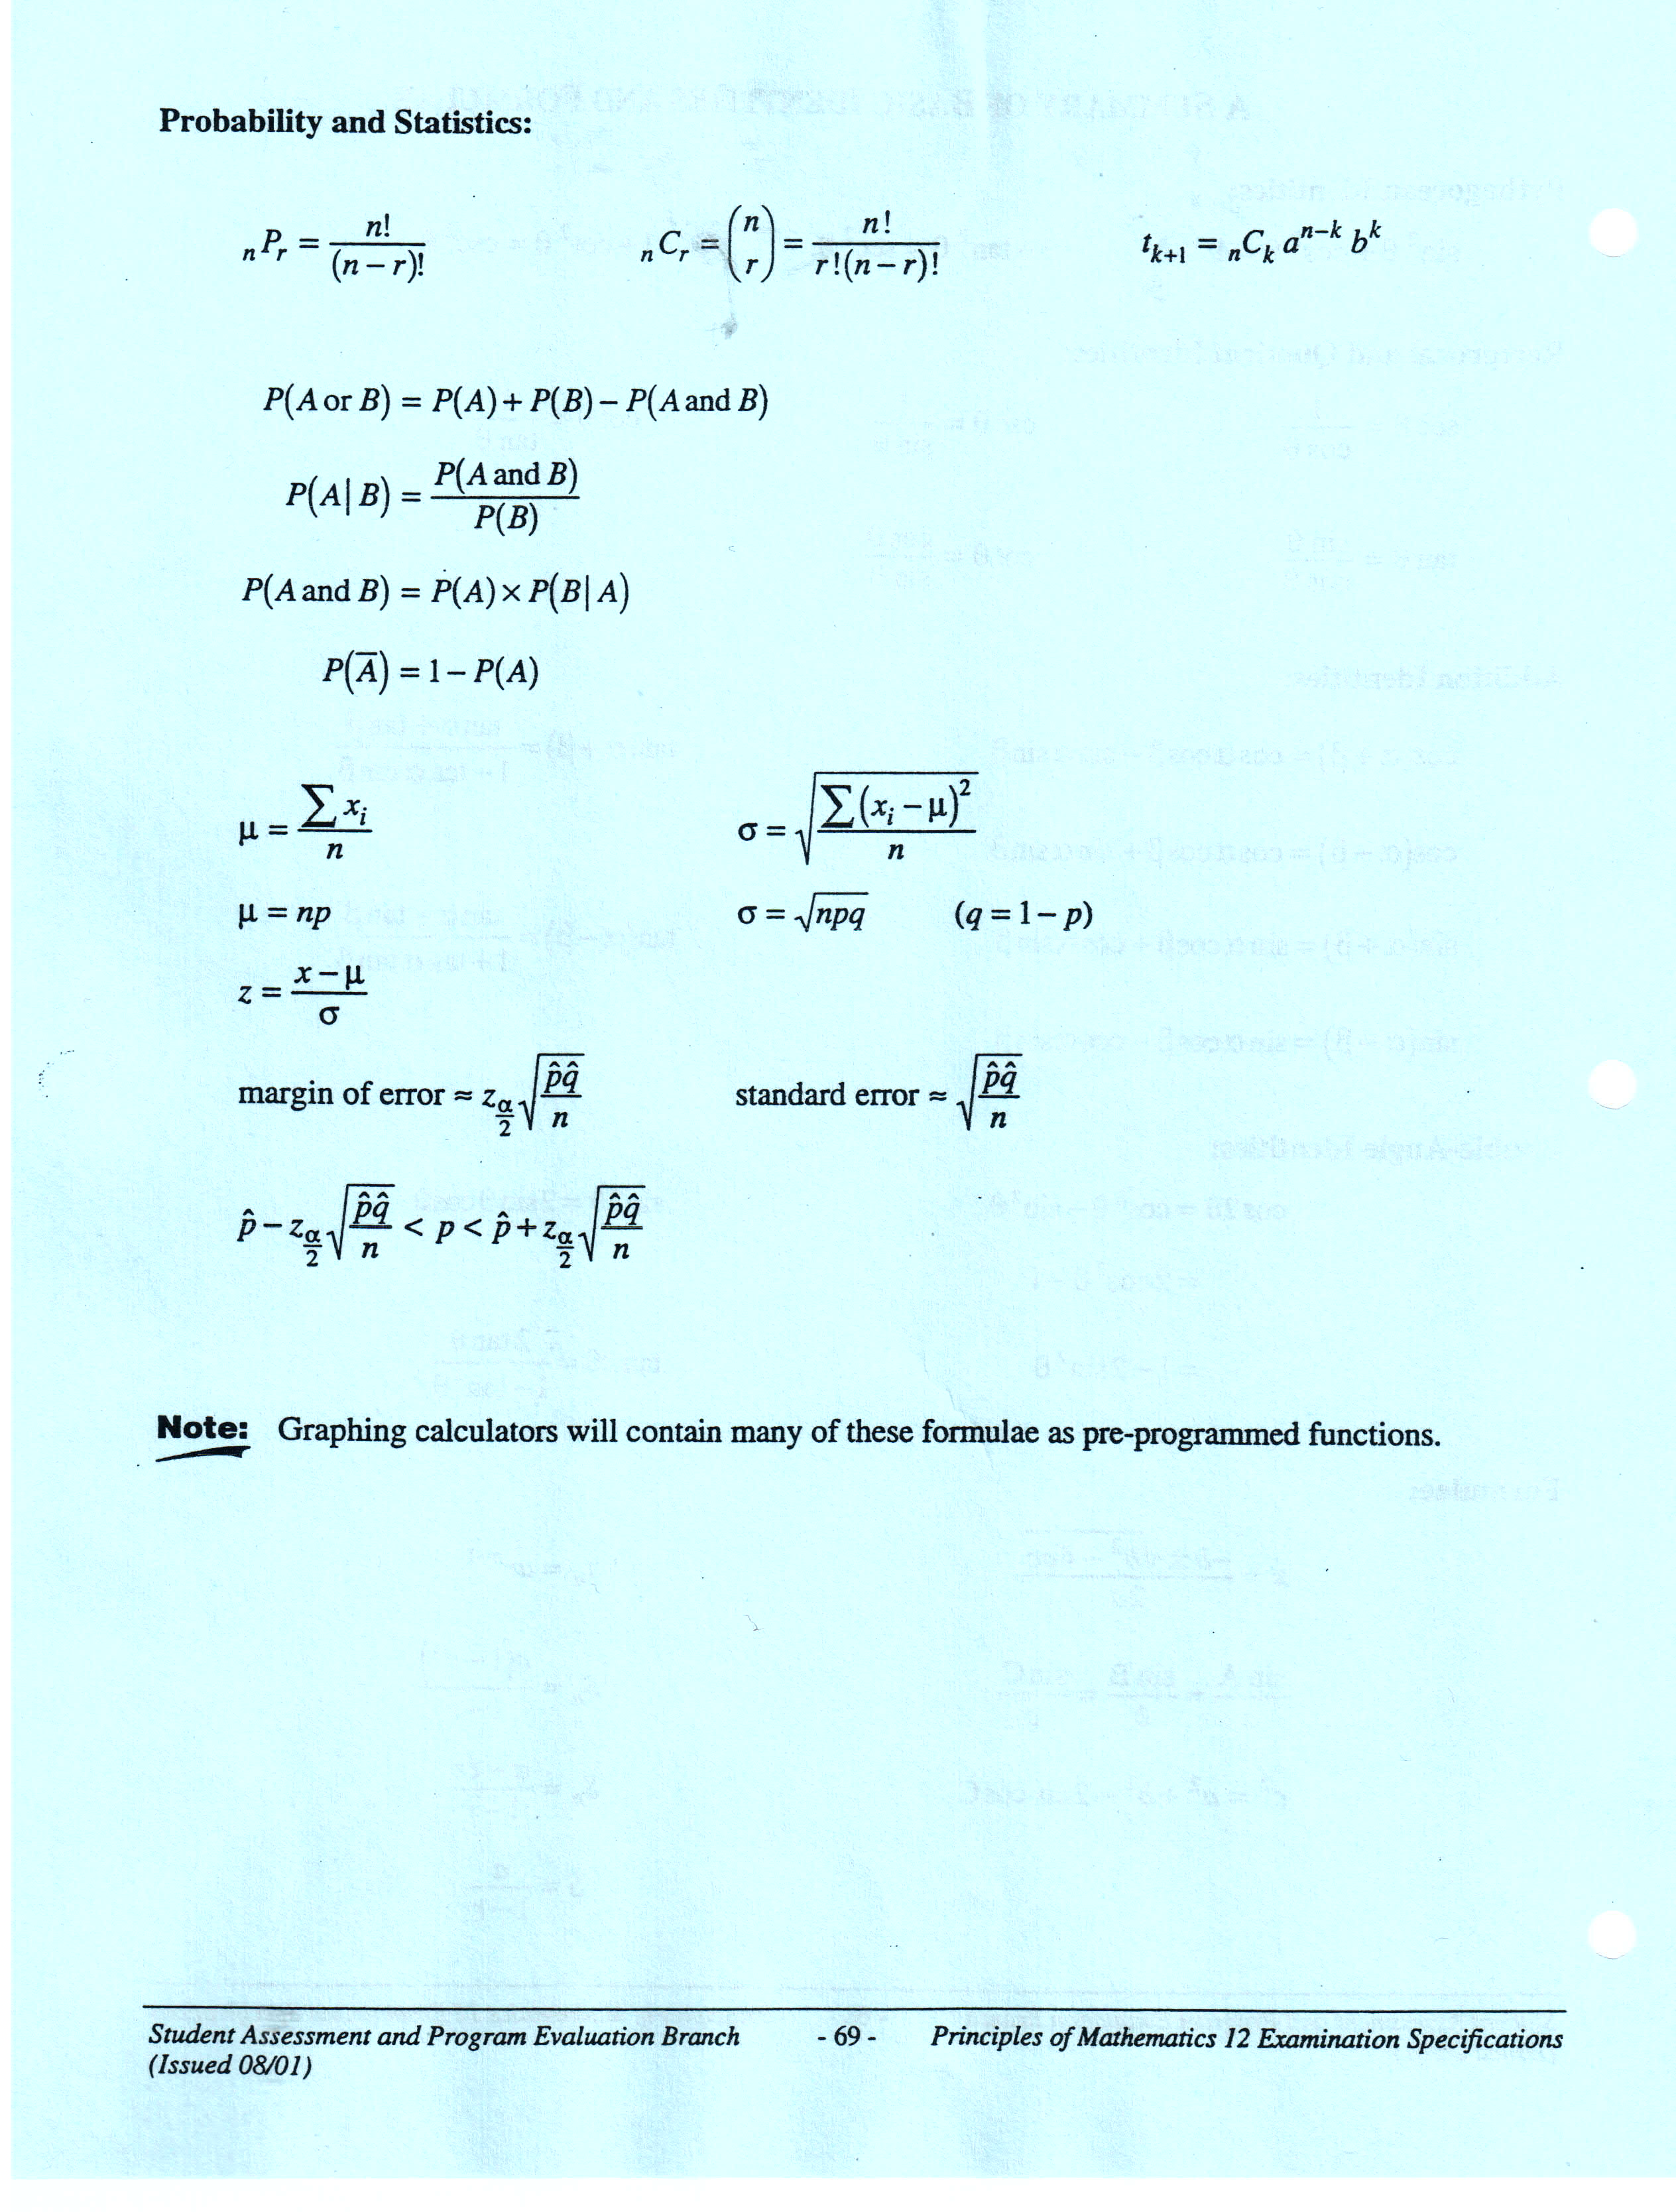 Pre calculus 11 textbook mcgraw pdf